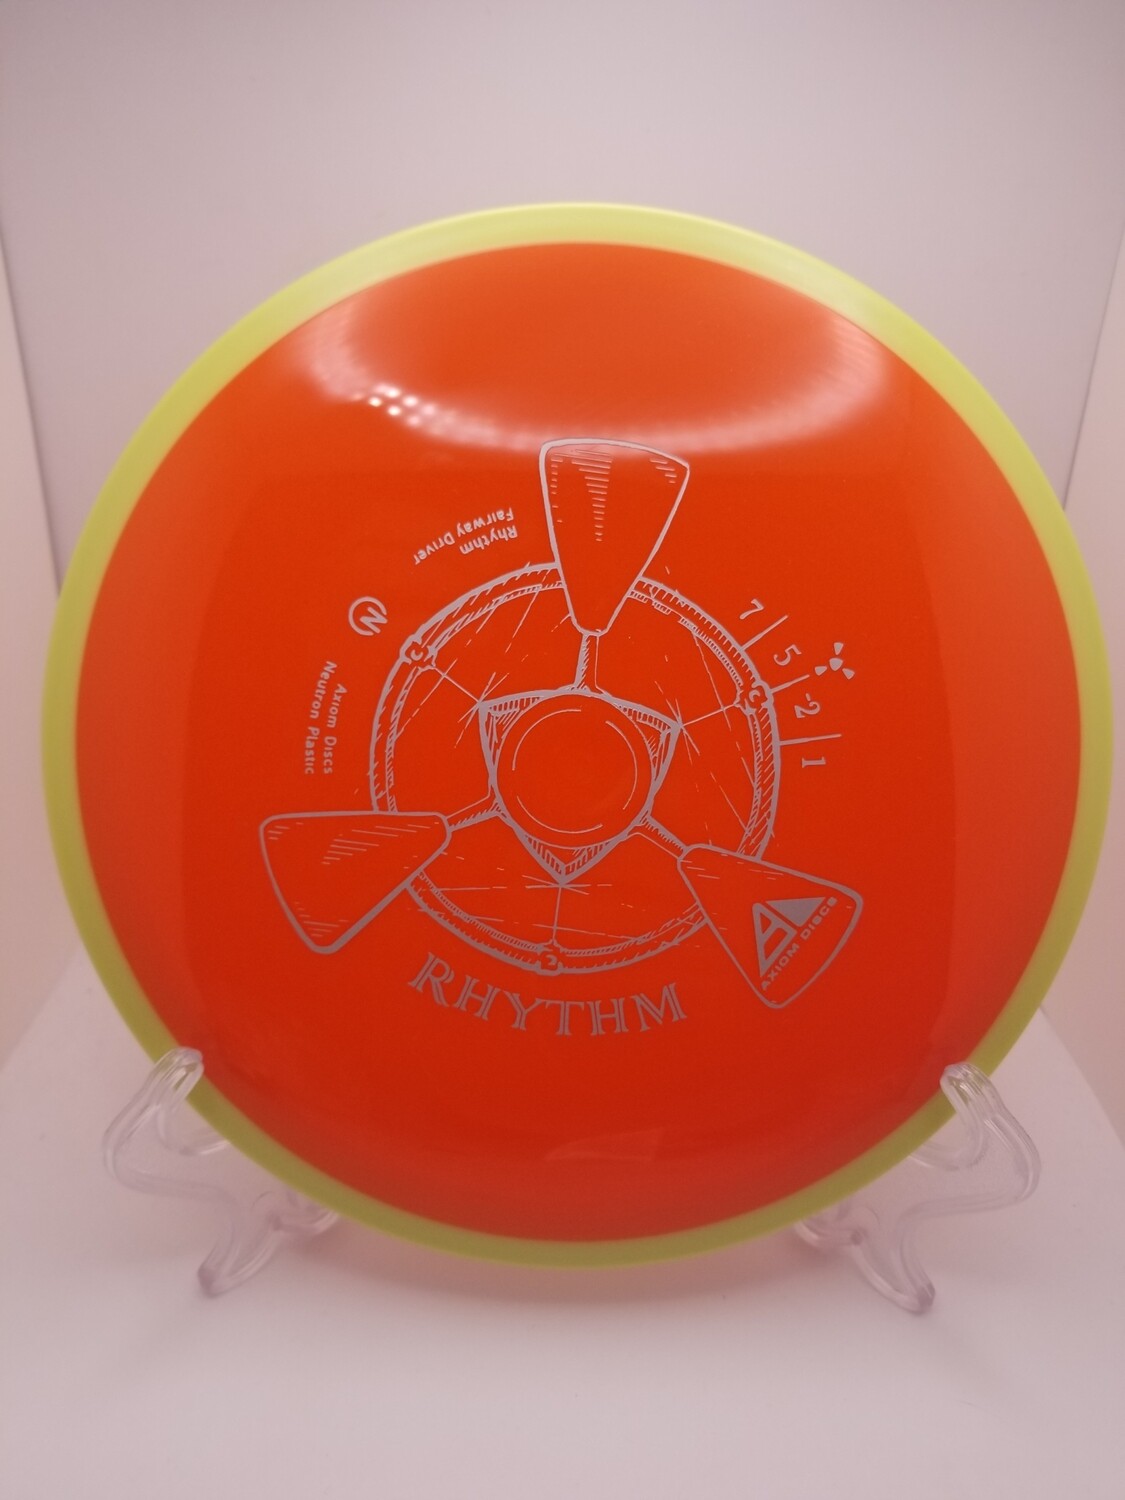 Axiom Discs Orange with yellow rim Stamped Neutron Rhythm 170g.